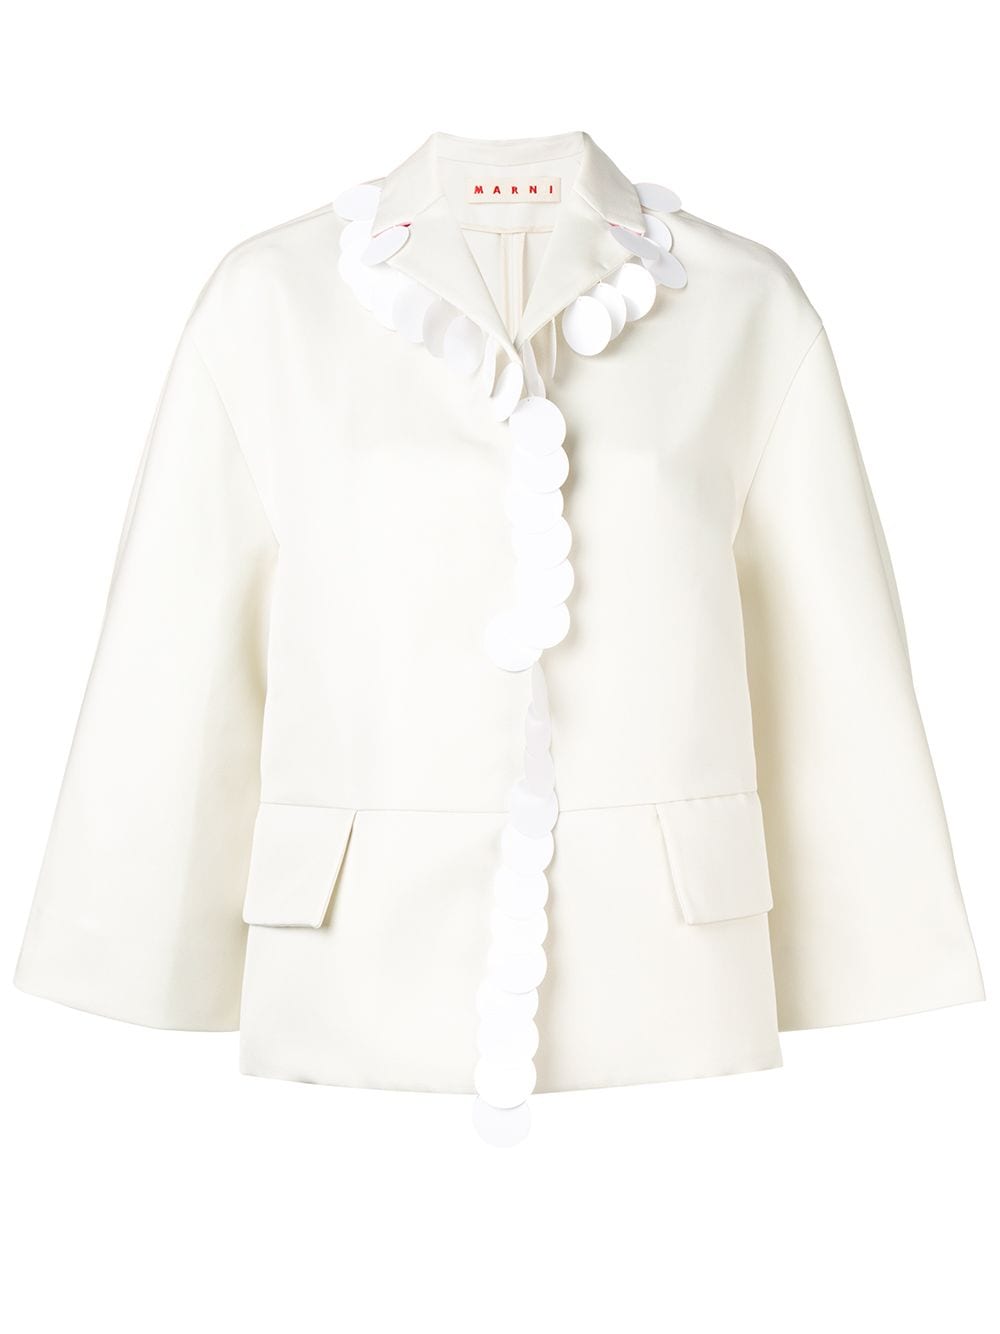 Marni pailette trim jacket - White von Marni